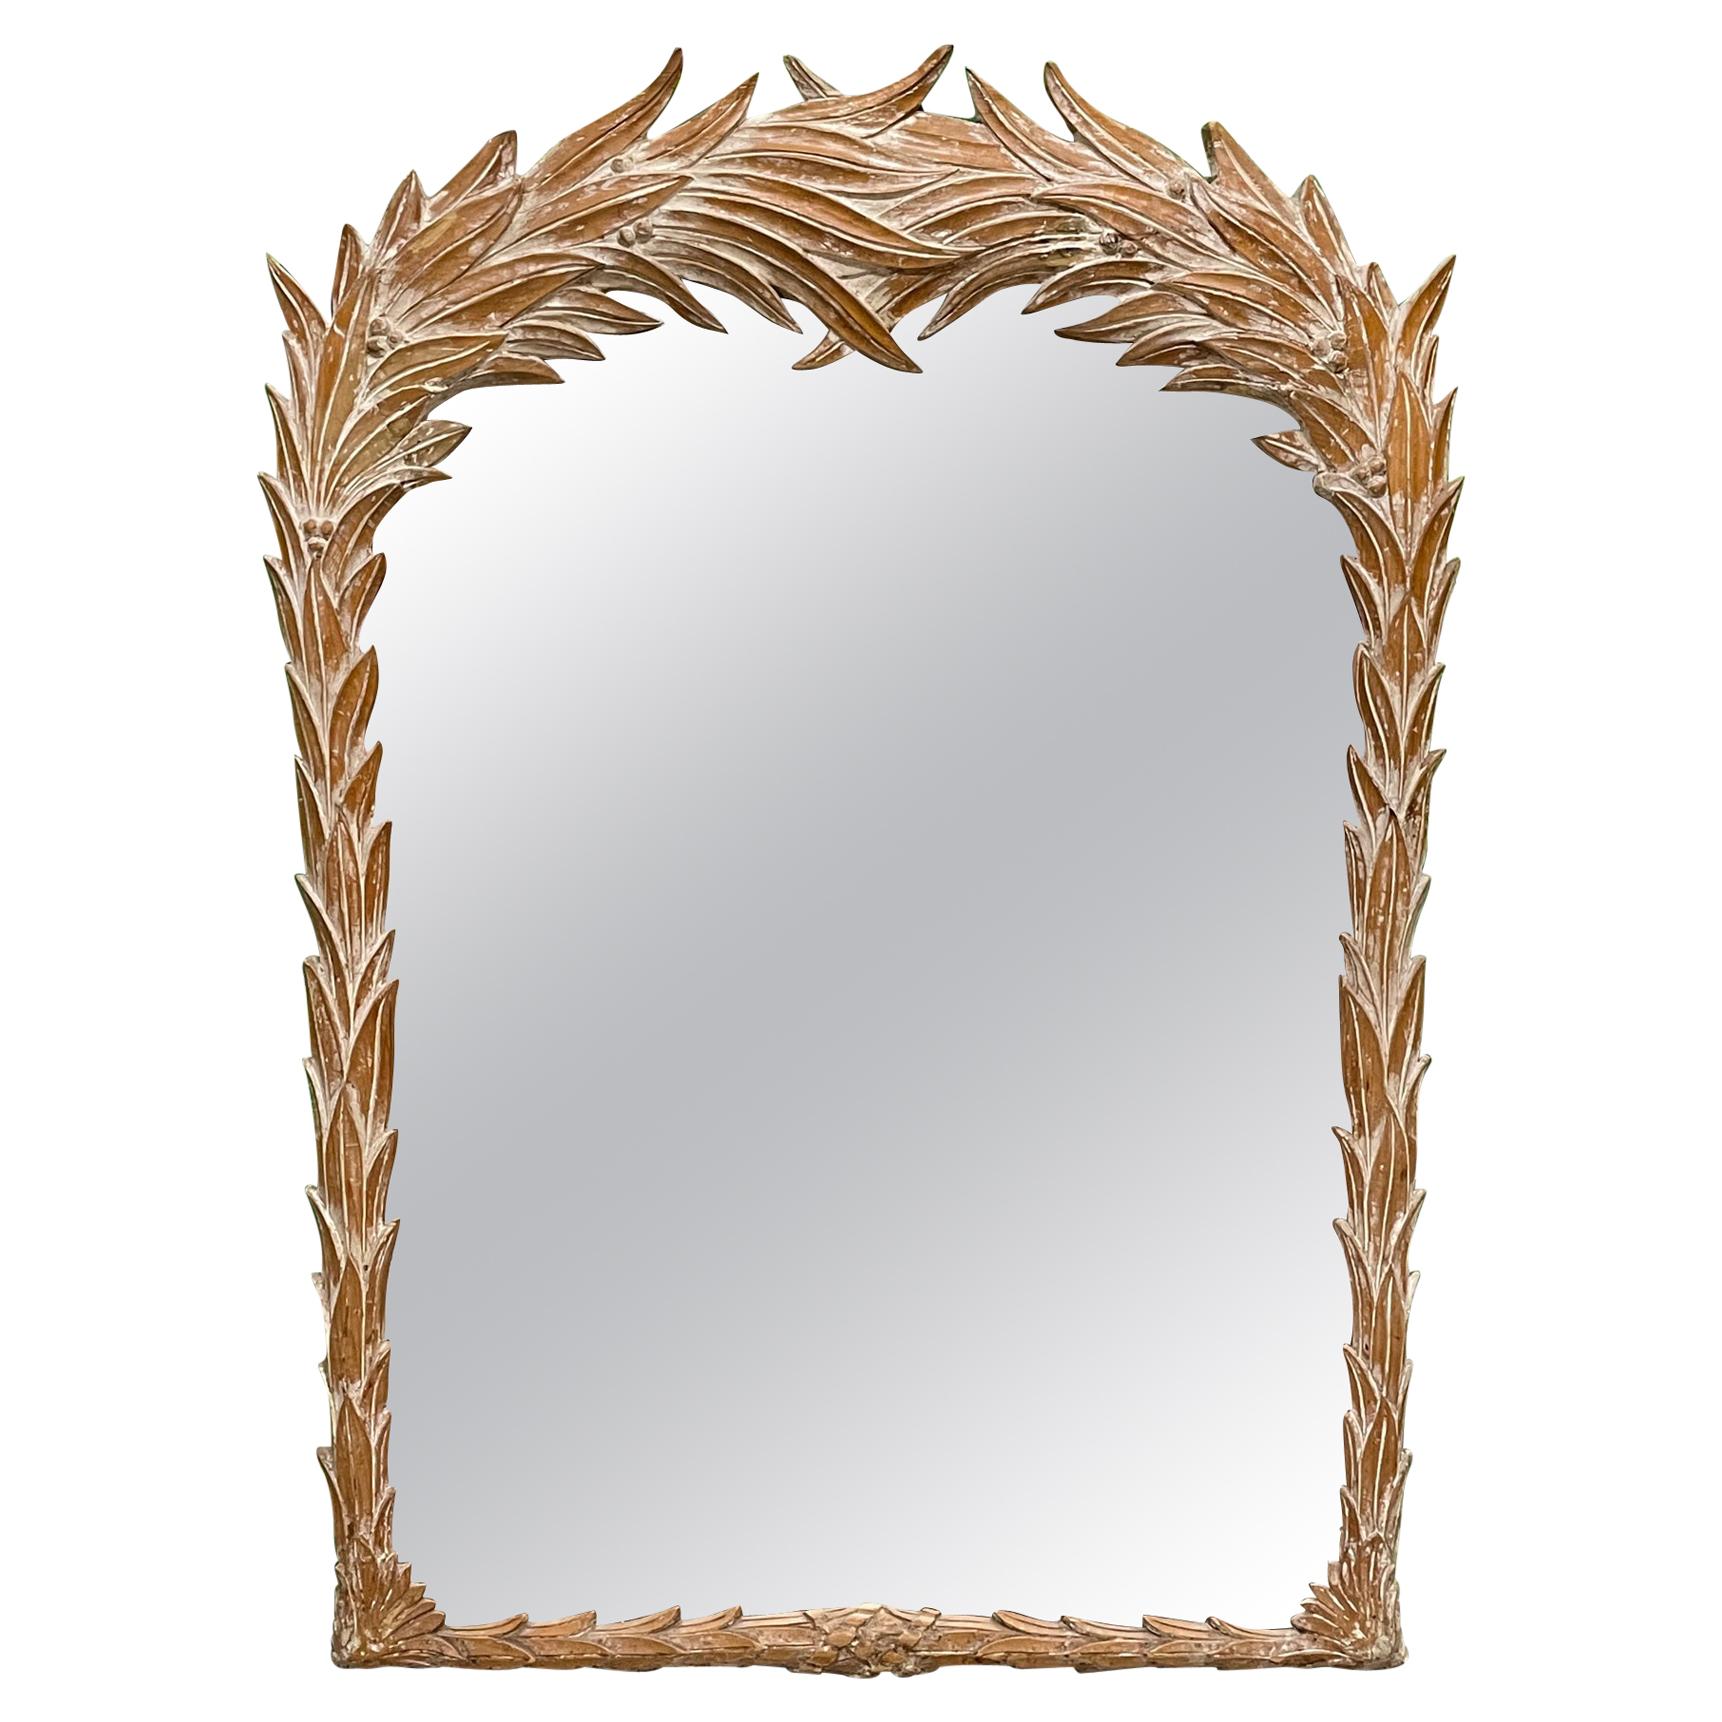 Serge Roche Style Palm Frond Mirror